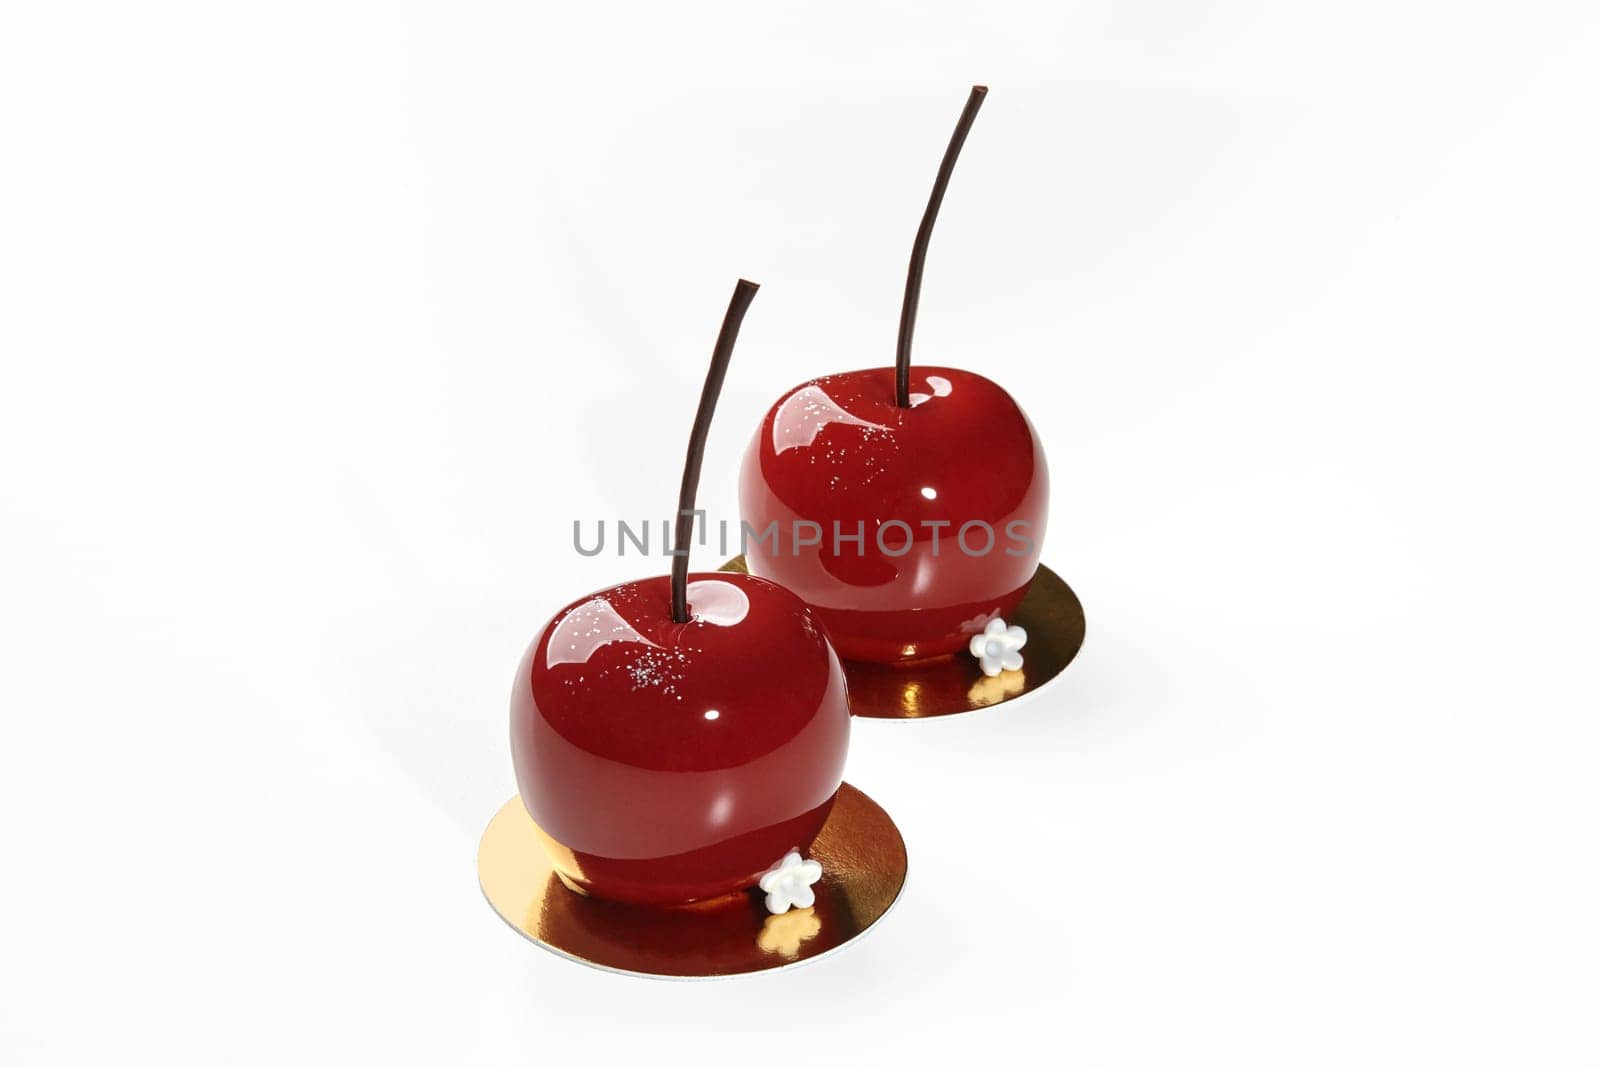 Two cherry-shaped desserts with red glaze and chocolate stems by nazarovsergey